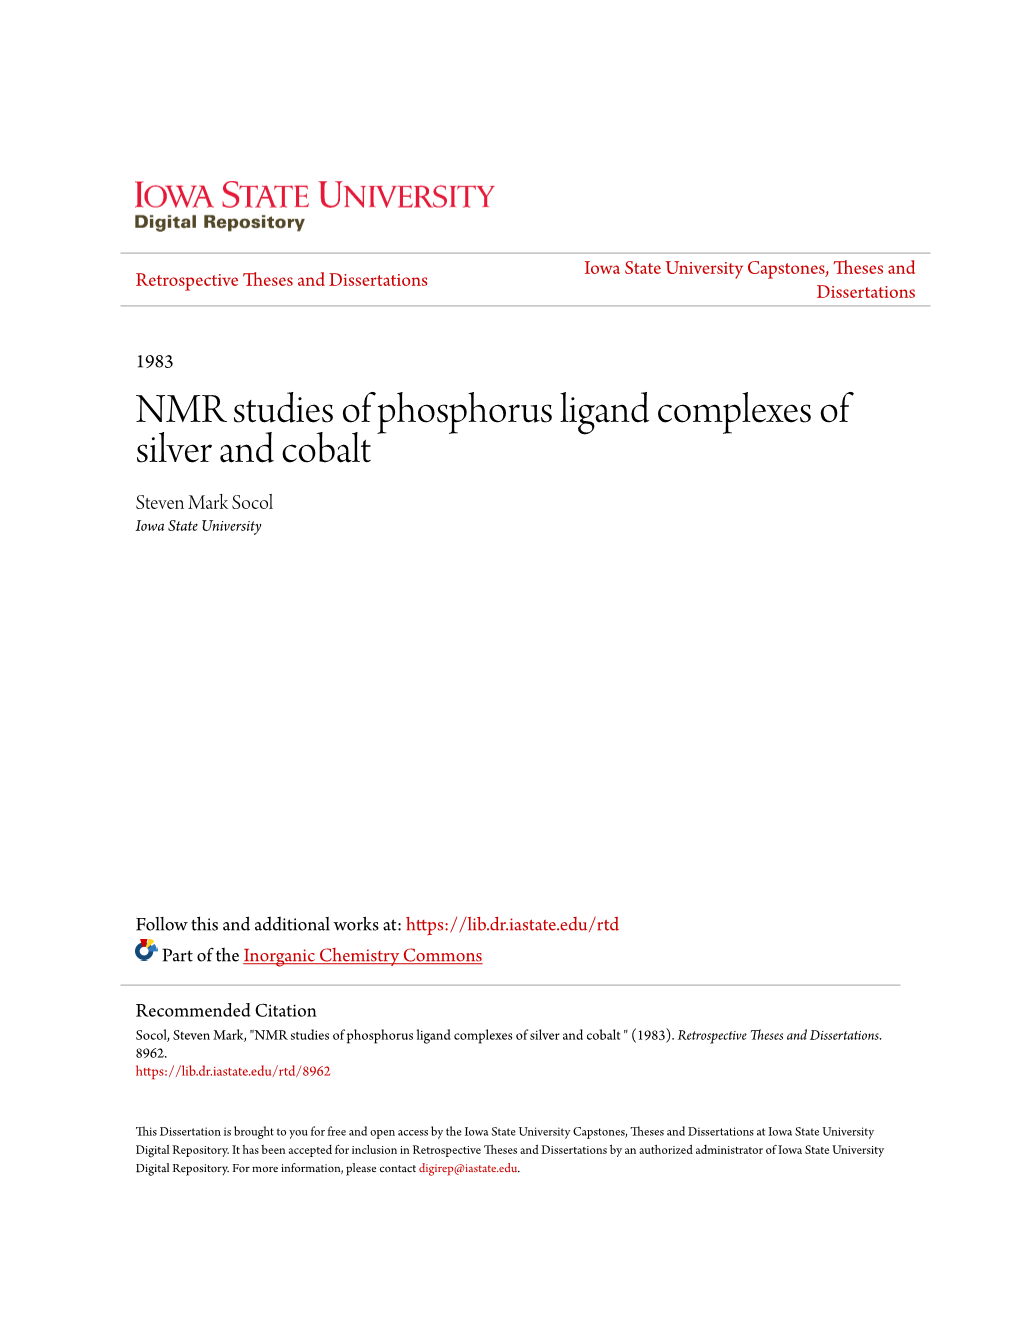 NMR Studies of Phosphorus Ligand Complexes of Silver and Cobalt Steven Mark Socol Iowa State University